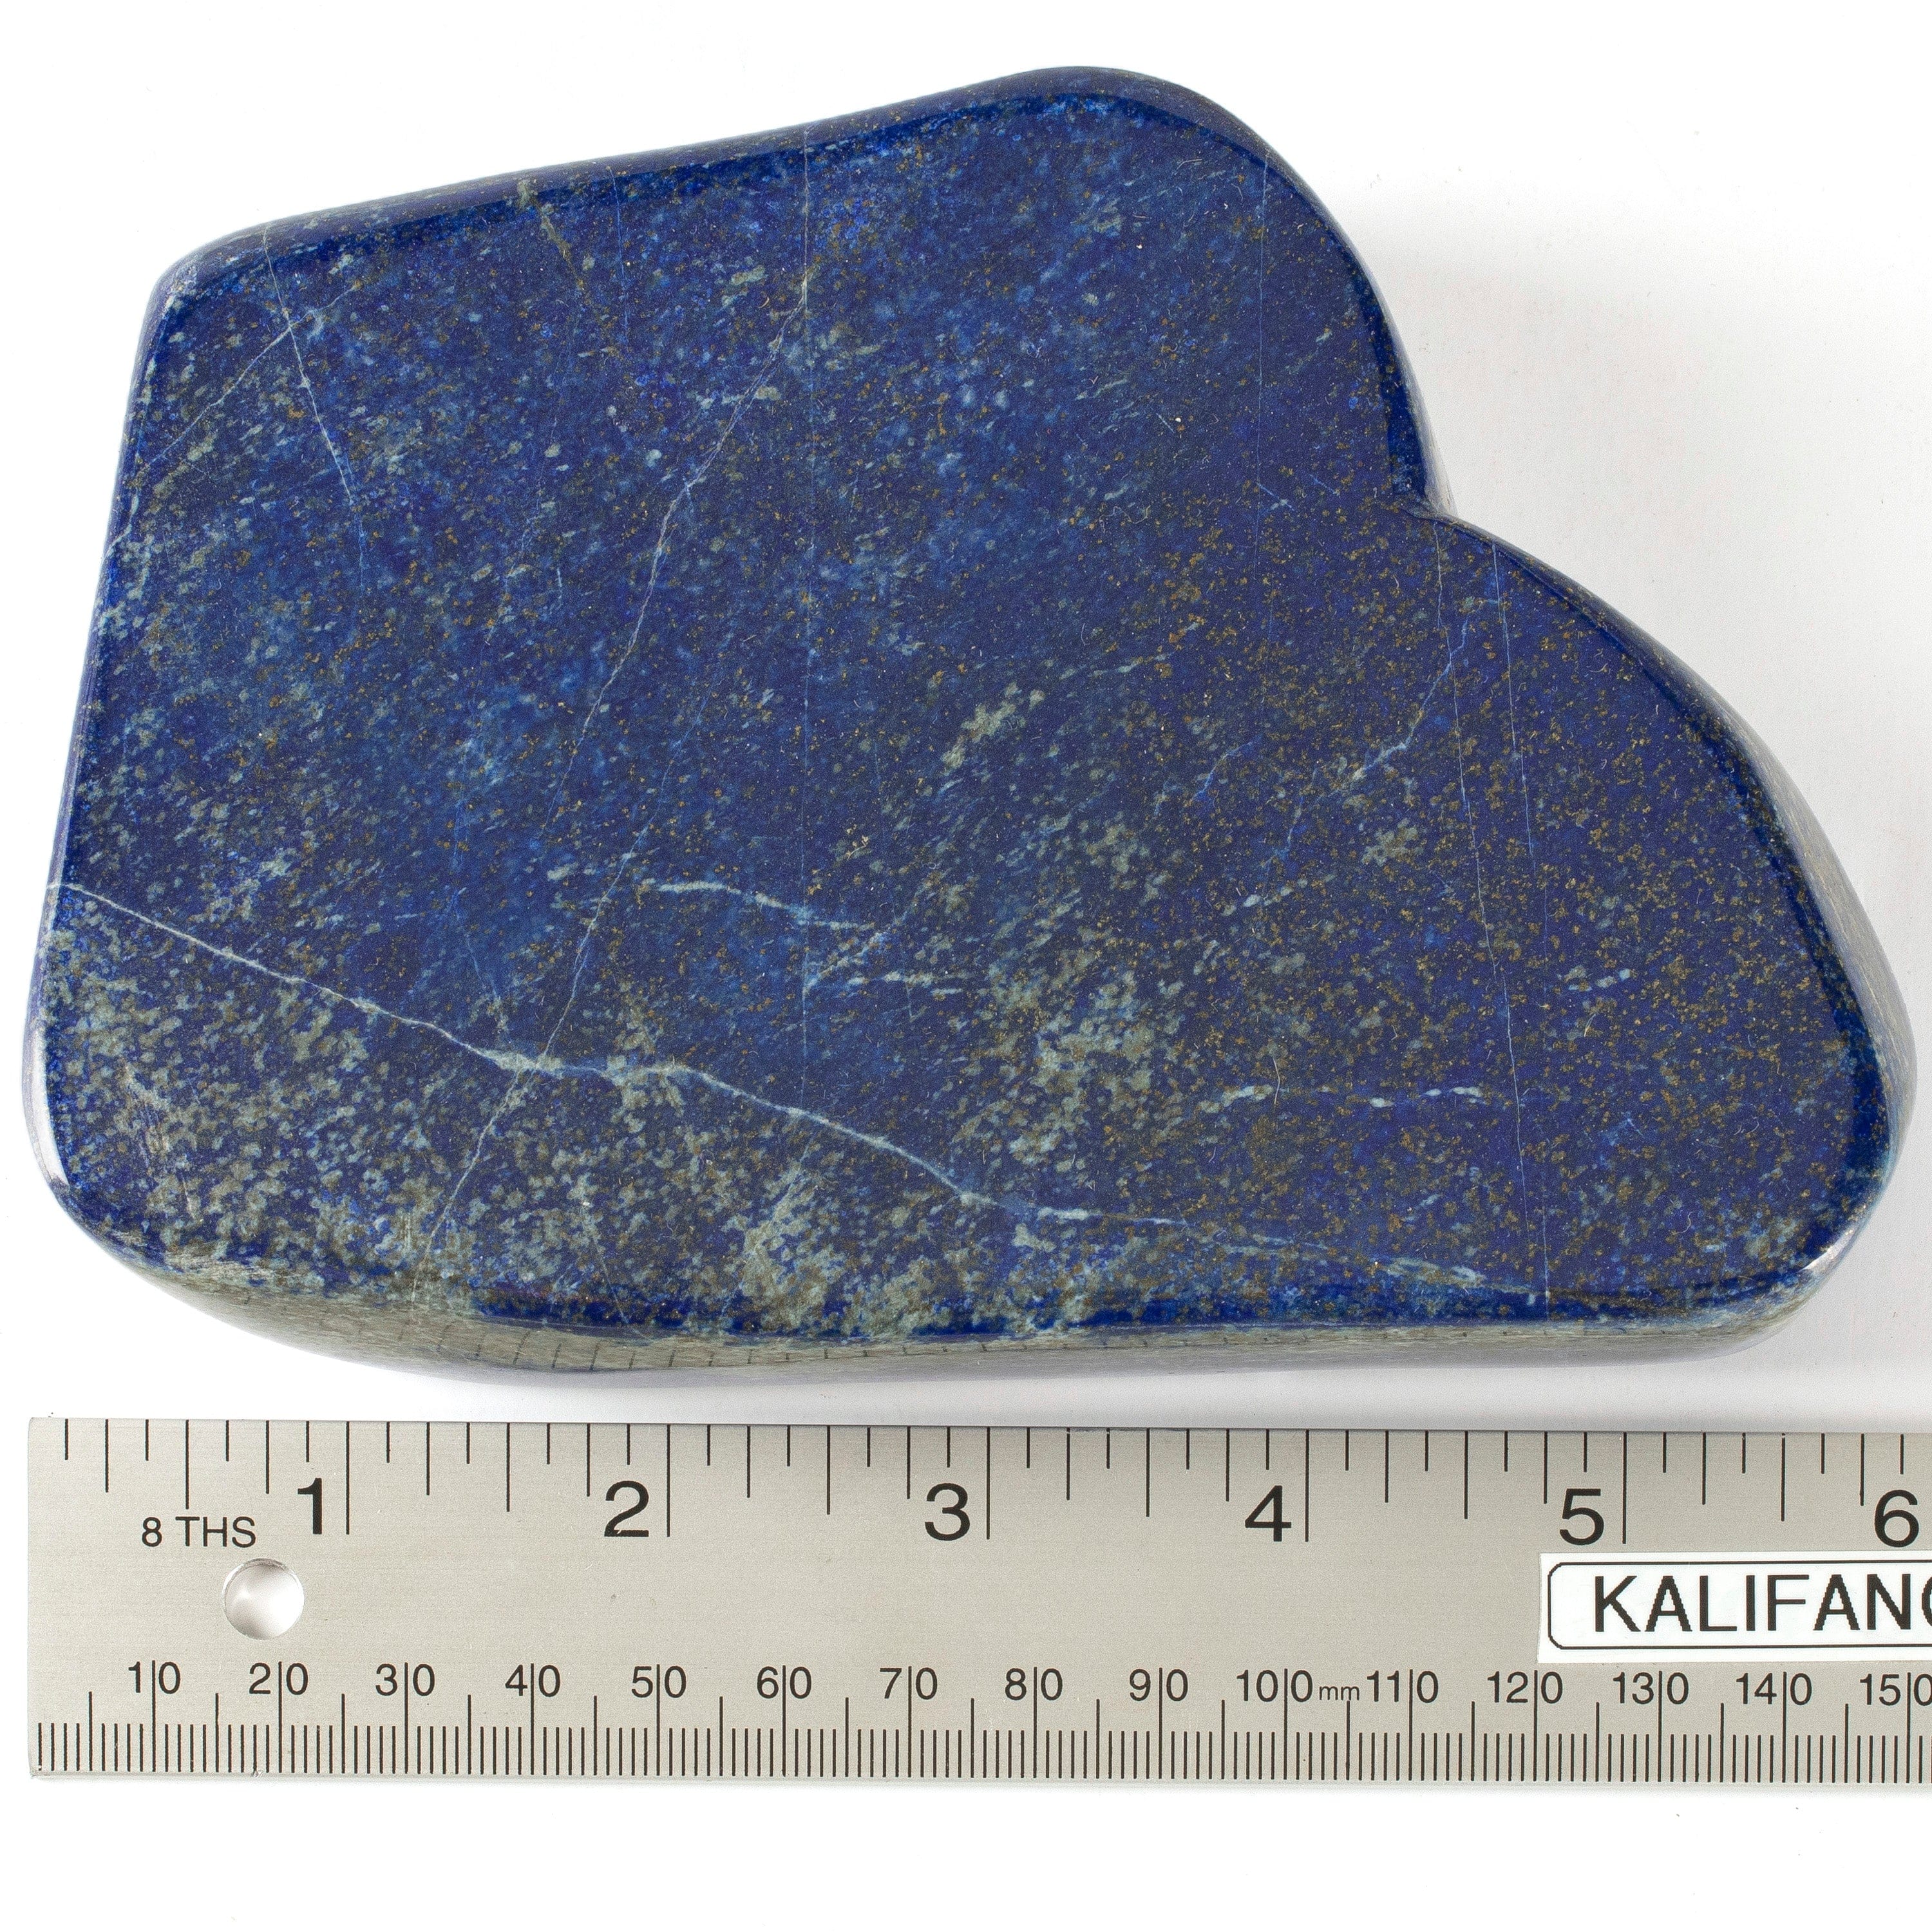 Kalifano Lapis Lapis Lazuli Freeform from Afghanistan - 6" / 942 grams LP950.004